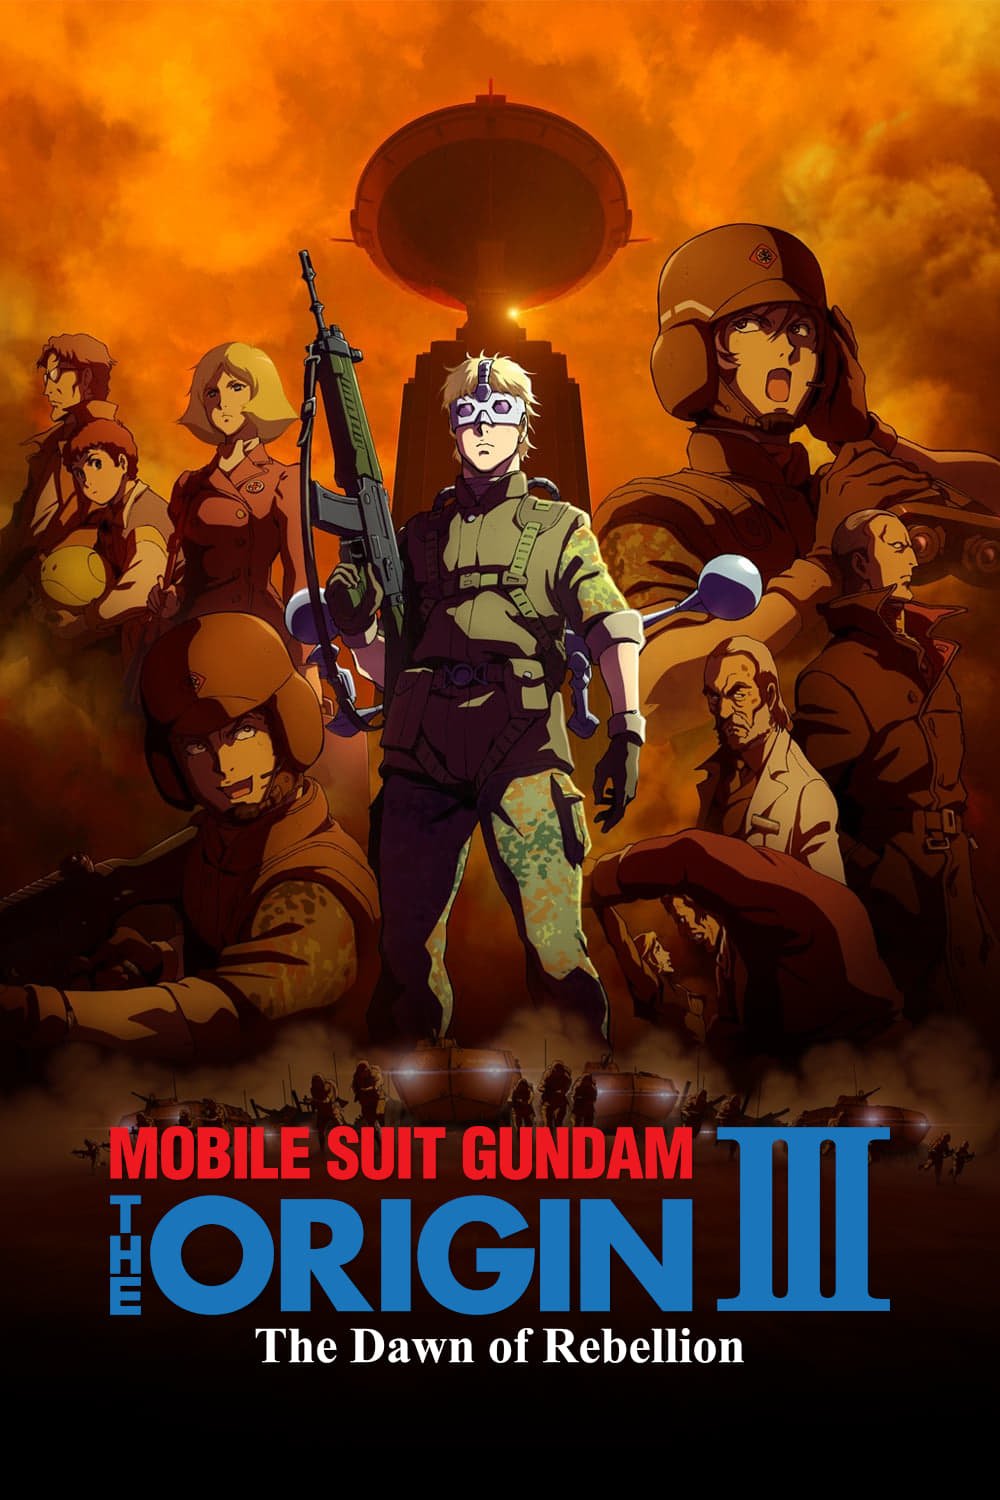 Mobile Suit Gundam: The Origin III - Dawn of Rebellion (2016)